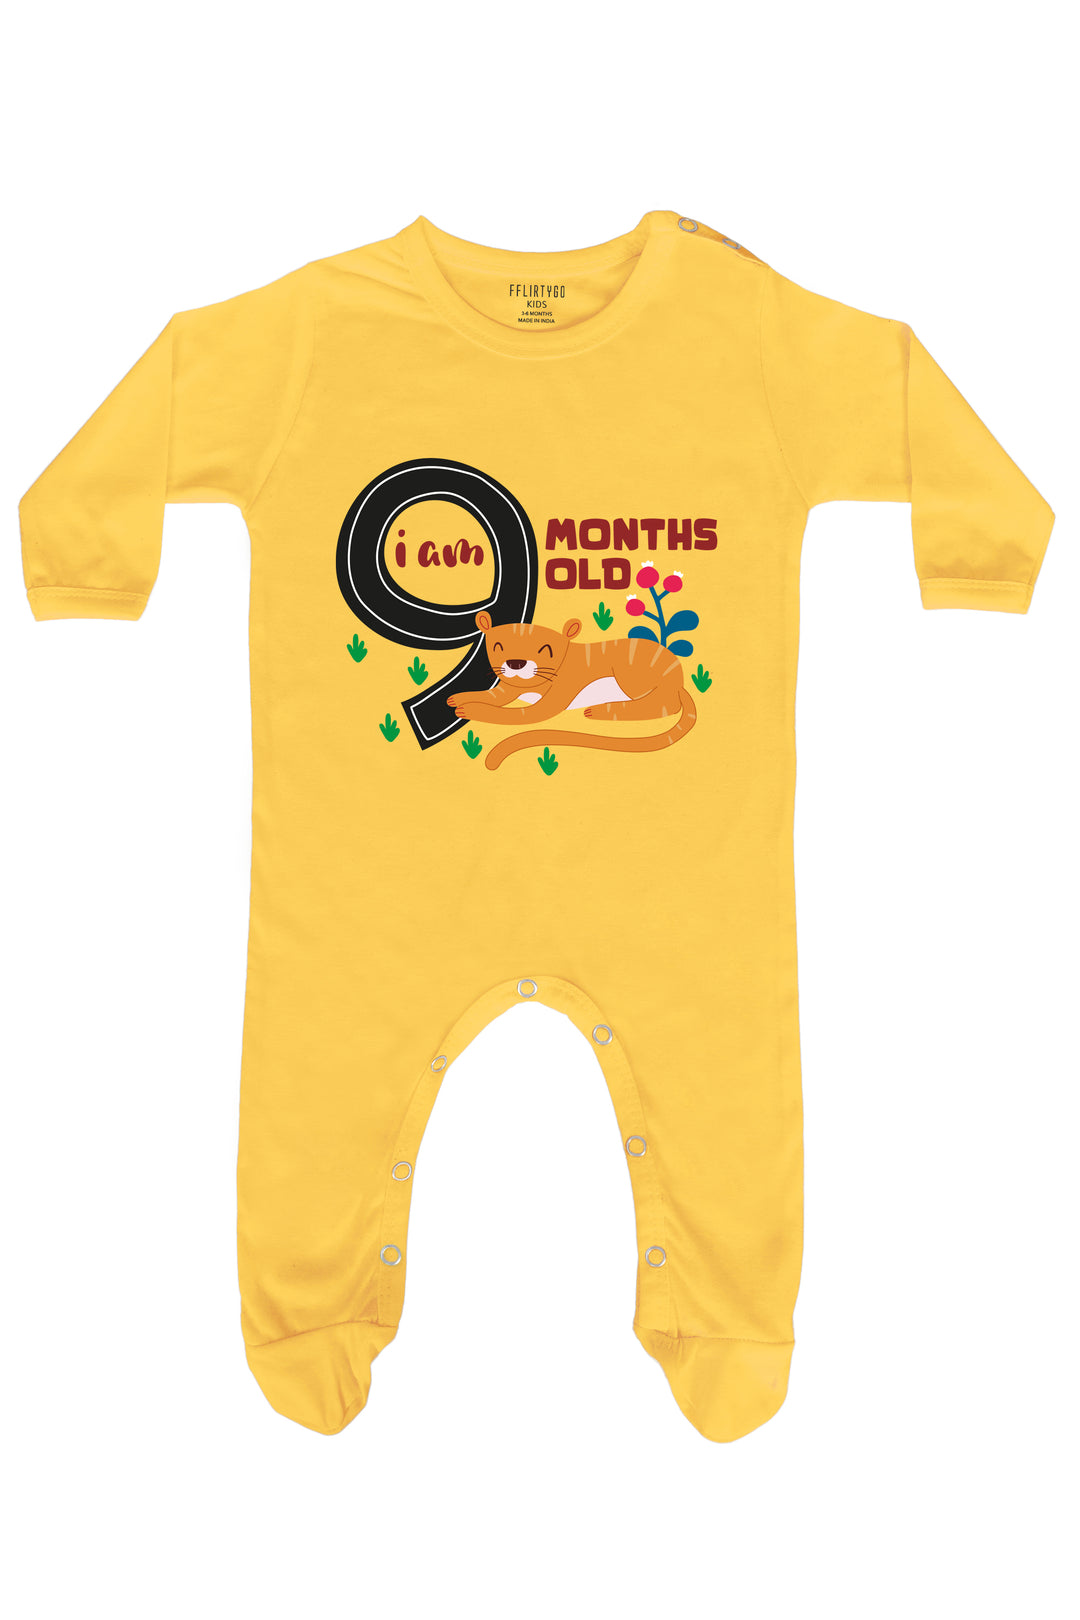 I Am 9 Months Old Romper Baby Romper | Onesies